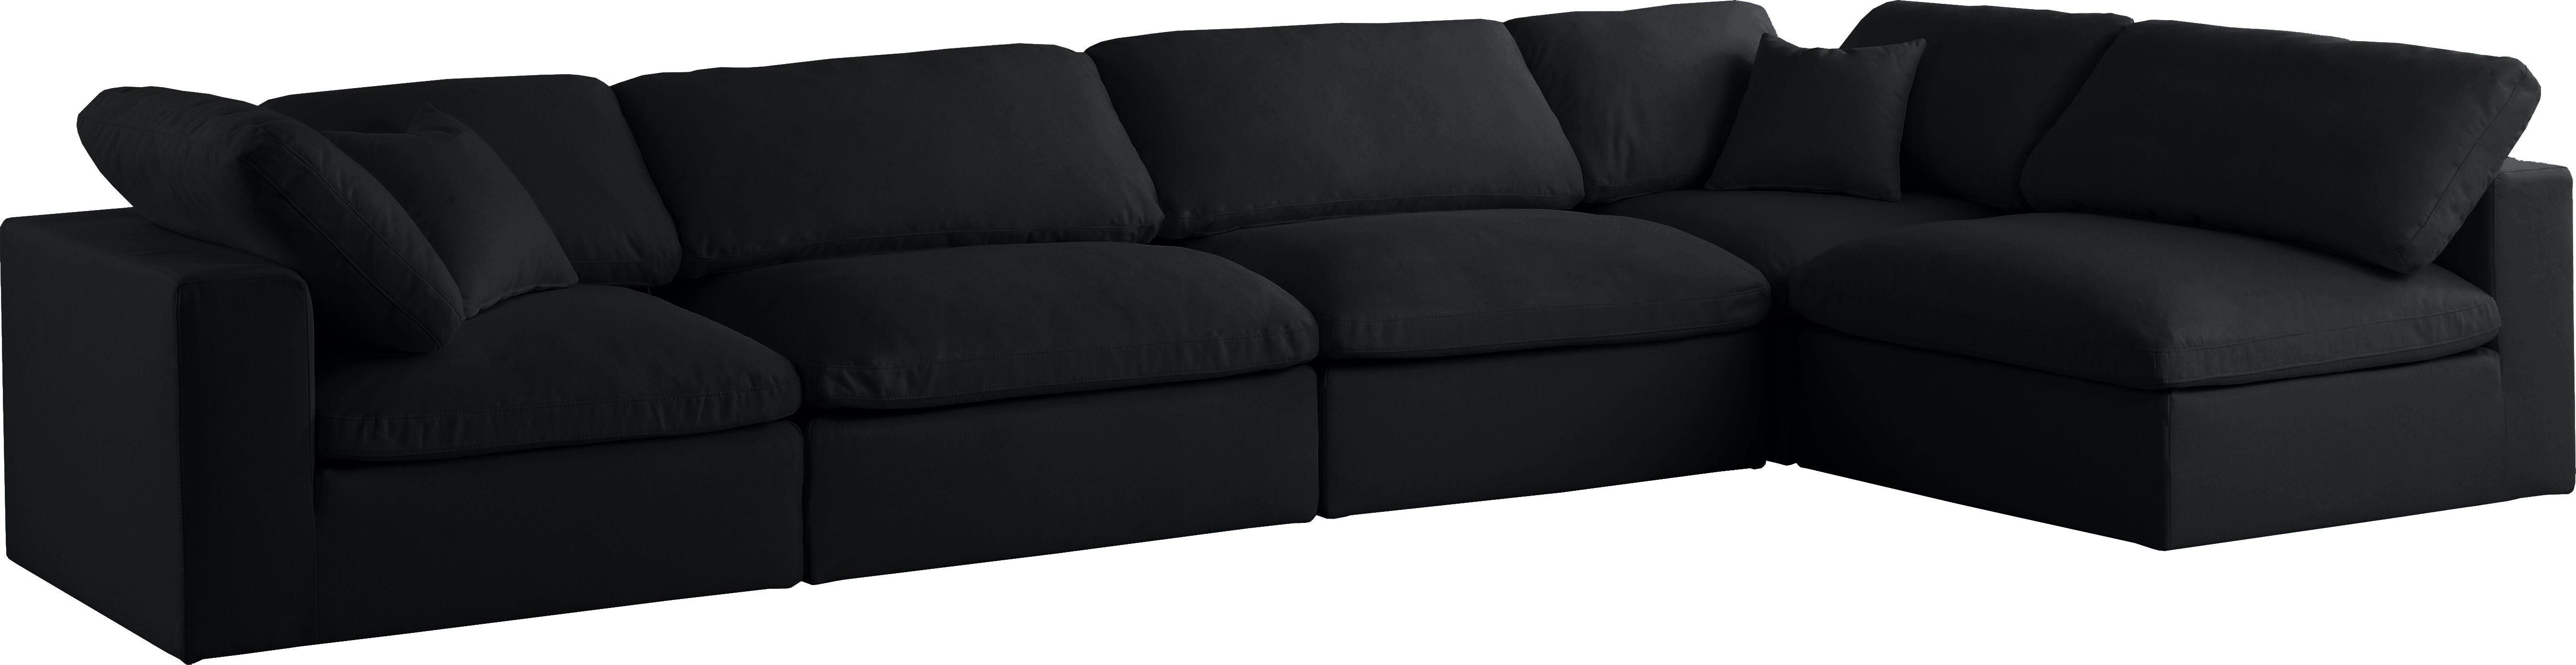 Meridian Furniture - Plush - Velvet Standart Comfort Modular Sectional 5 Piece - Black - 5th Avenue Furniture